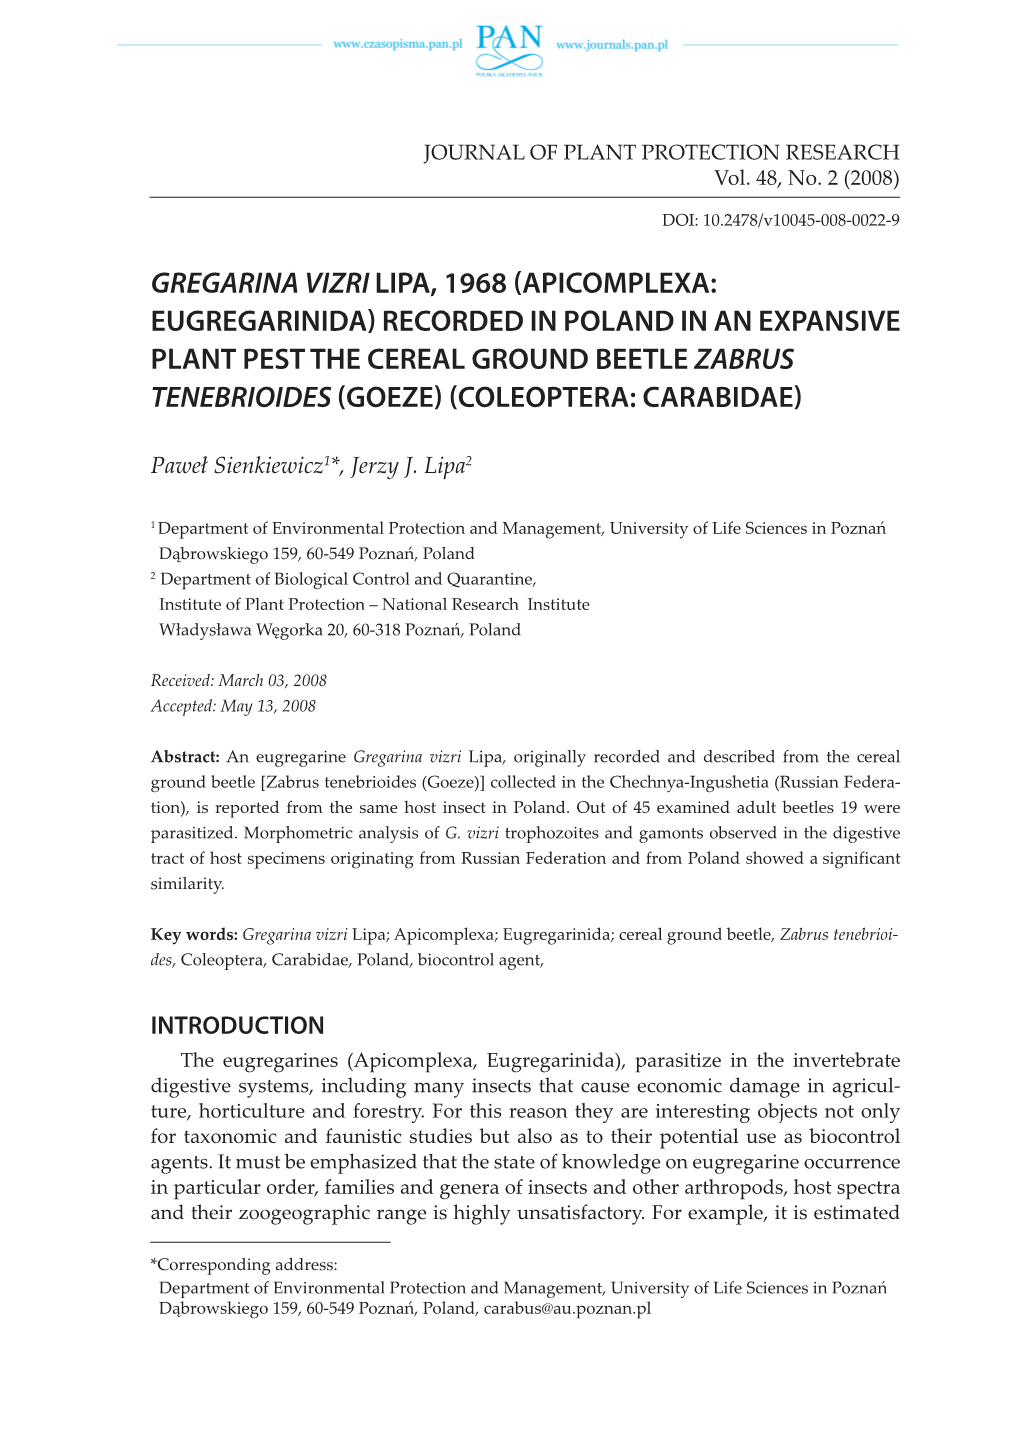 68 (Apicomplexa: Eugregarinida) Recorded in Poland in an Expansive Plant Pest the Cereal Ground Beetle Zabrus Tenebrioides (Goeze) (Coleoptera: Carabidae)